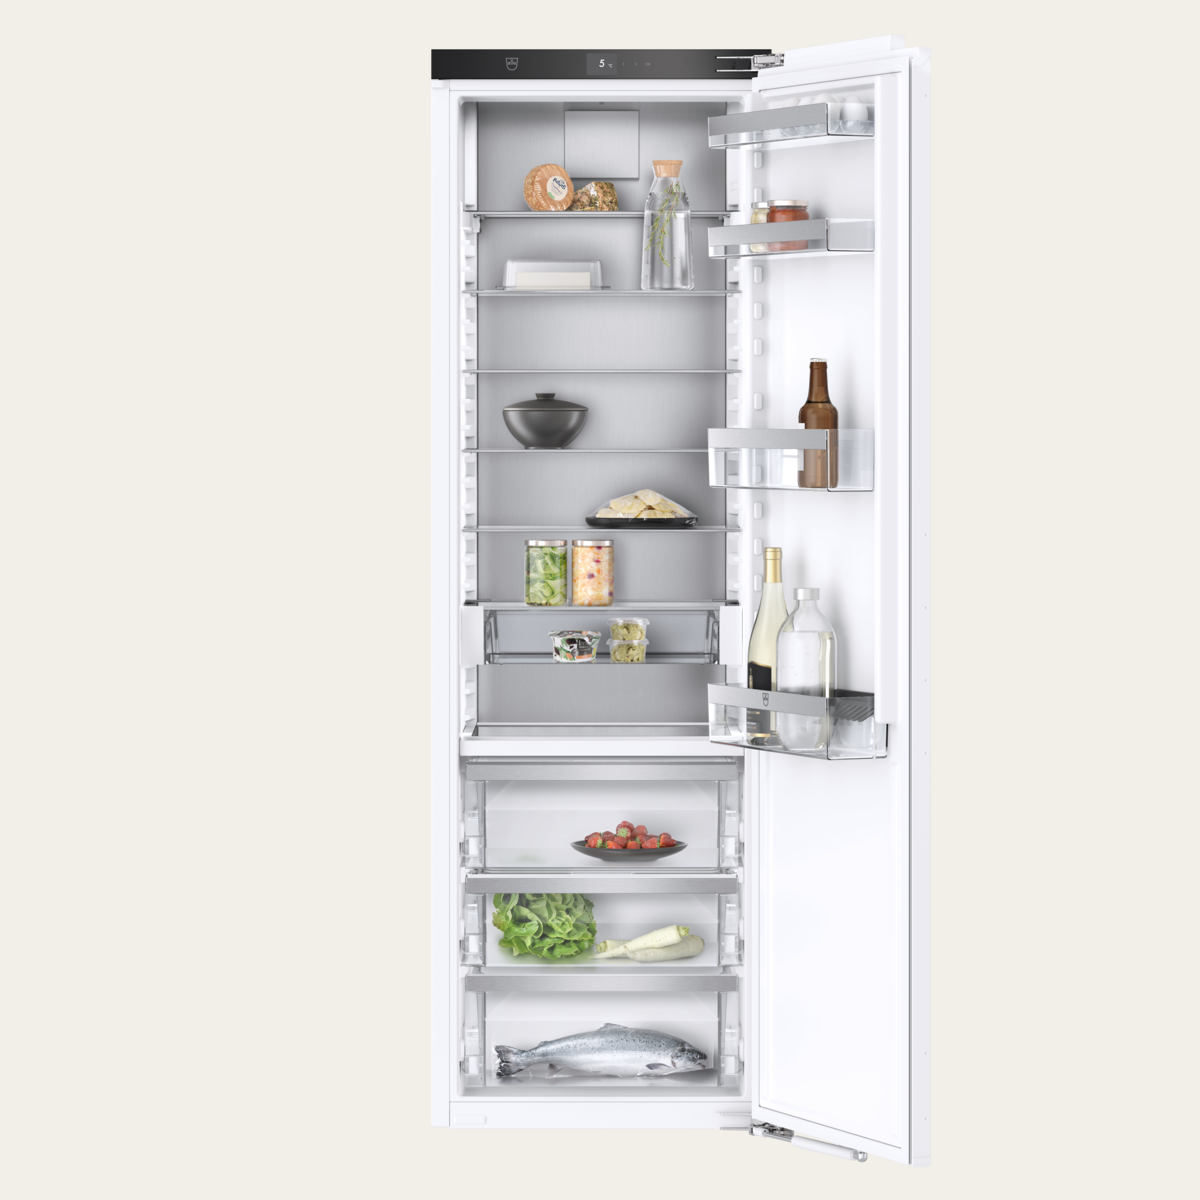 V-ZUG Refrigerator/freezer Cooler V4000 178K, Standard width: 60 cm, Standard height: 177.8 cm, Fully integratable, Door hinge: Right, Energy efficiency class: D